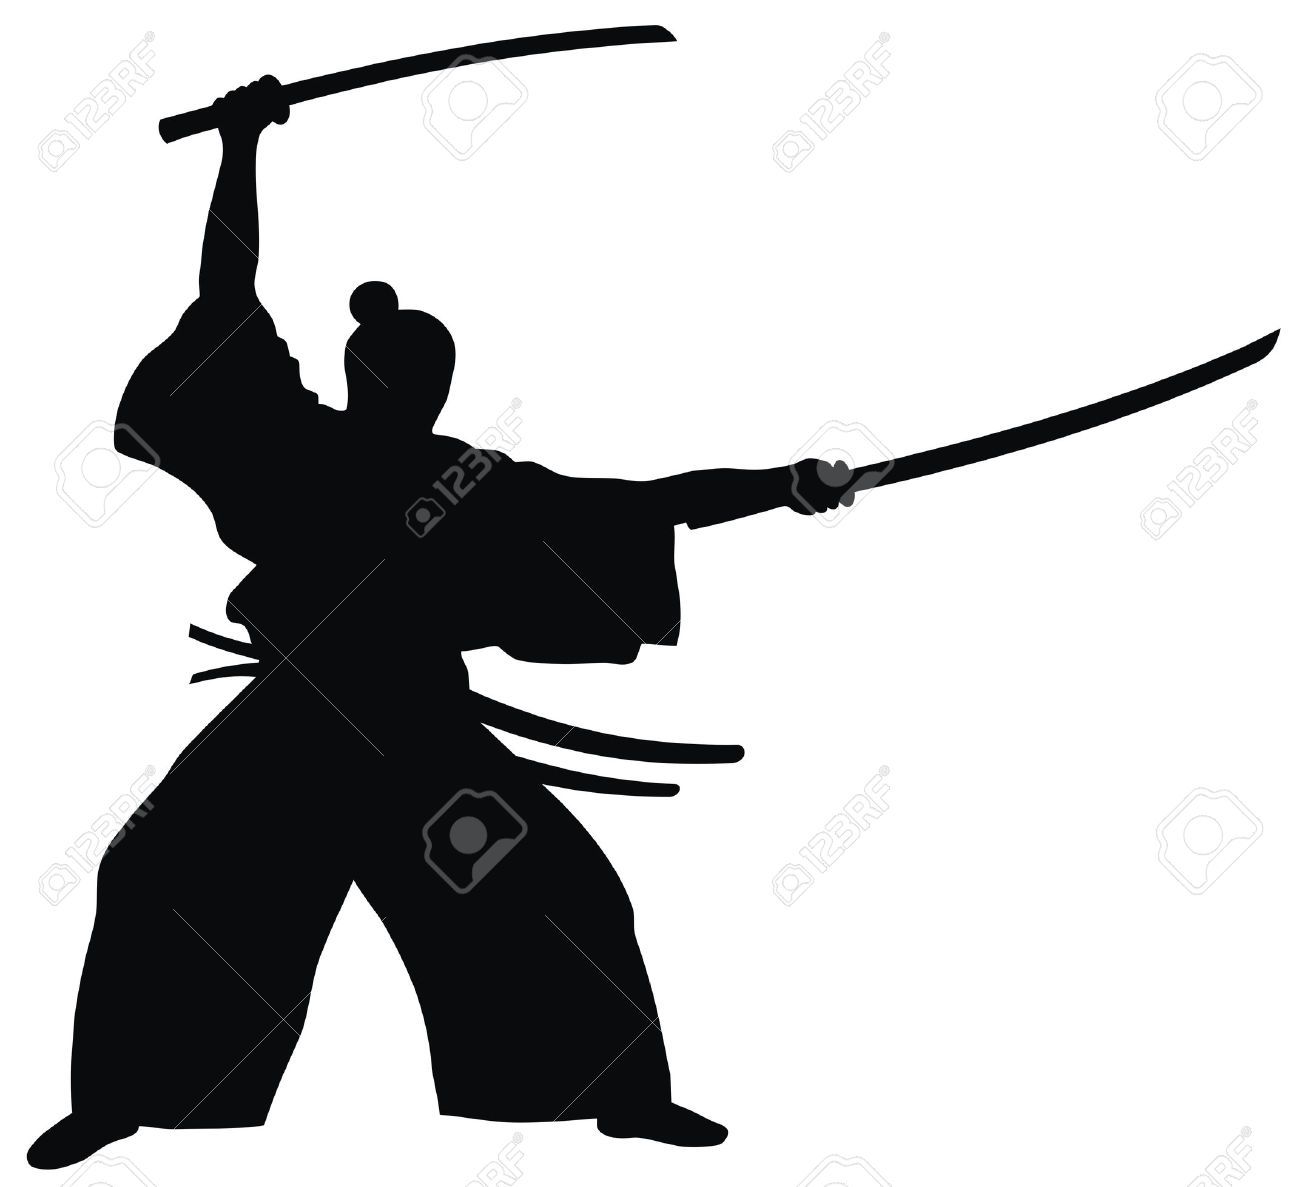 Samurai clipart silhouette. Image result for design